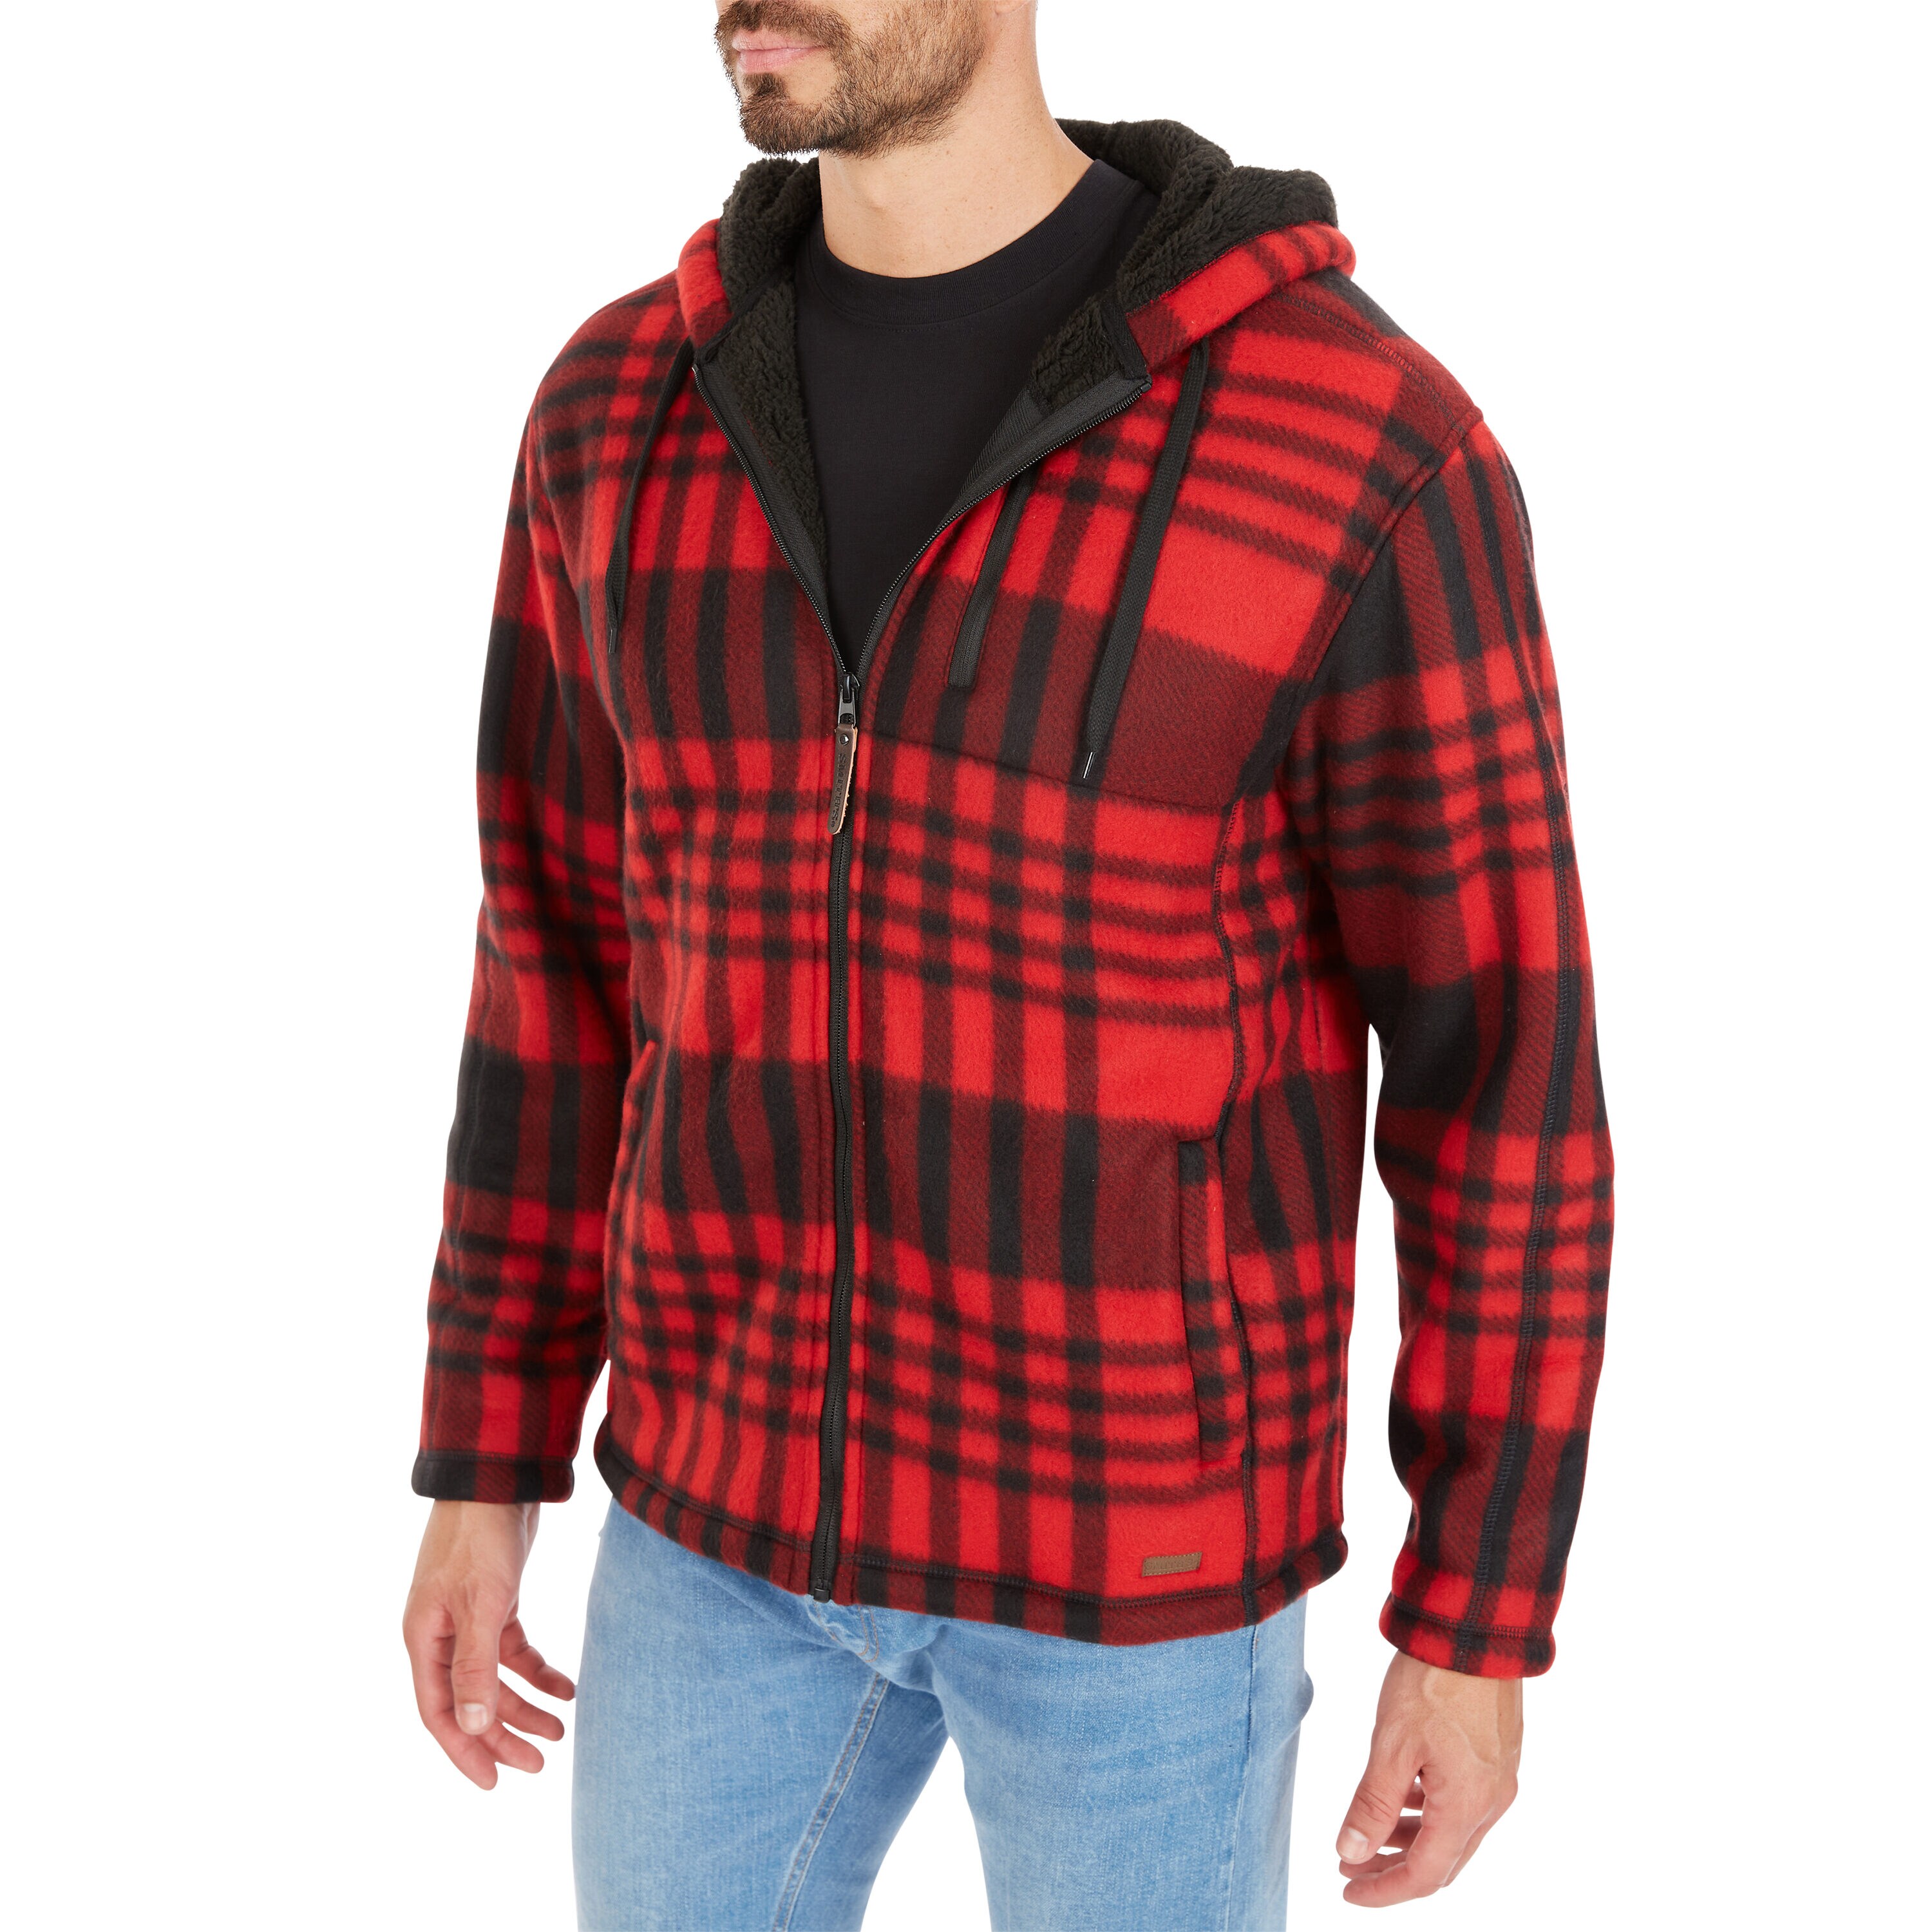 Men’s Hoodie Fleece Jacket With Pockets Warm Sherpa Lined Camo Hooded Coat